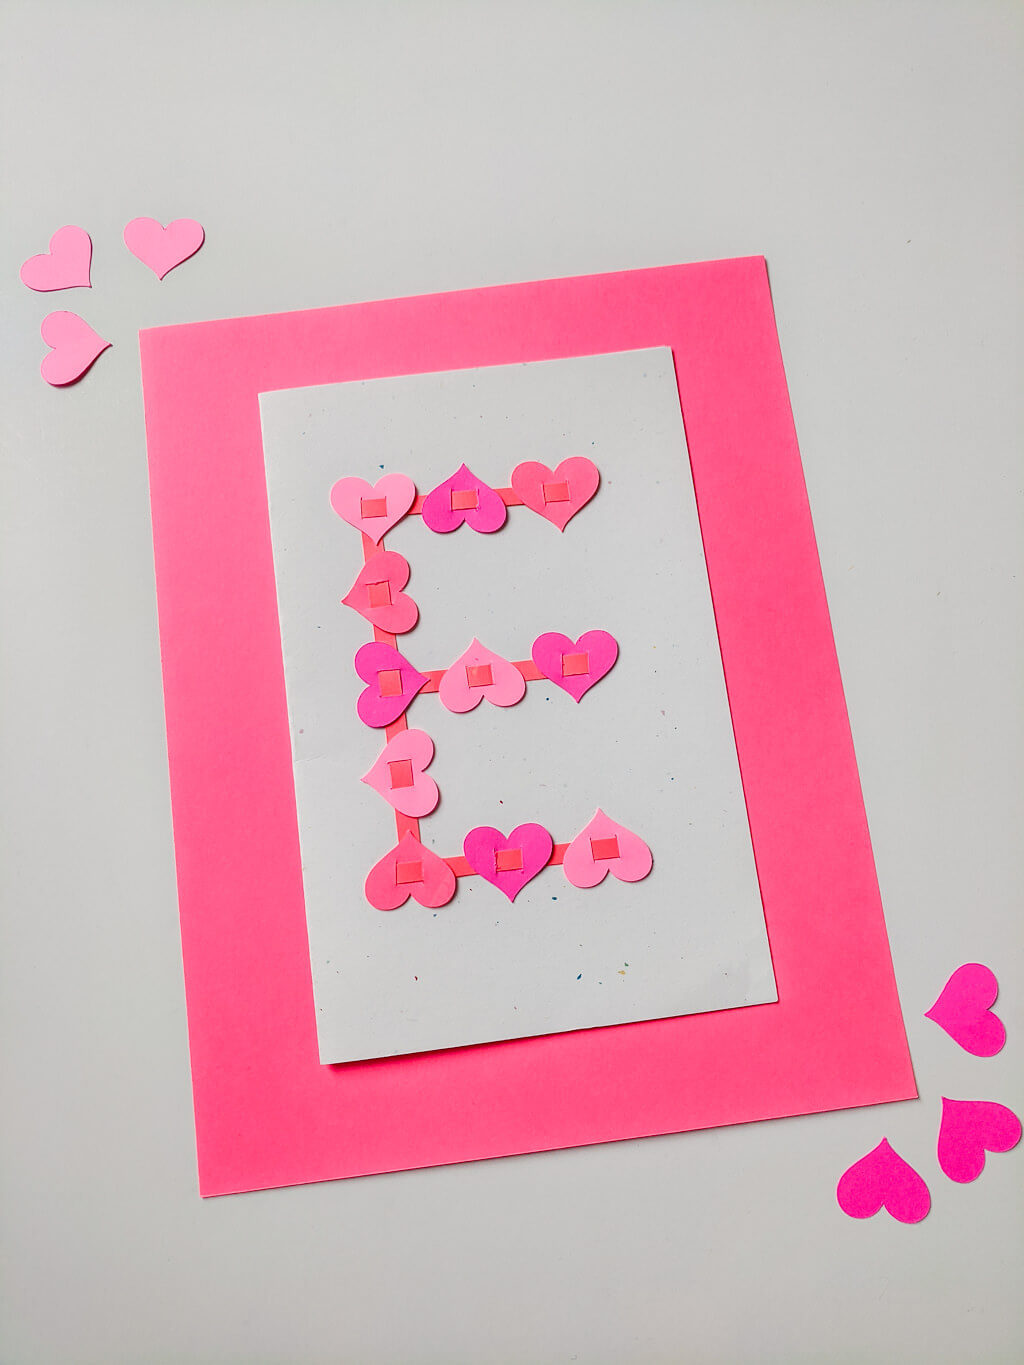 Heart Letter E handmade Valentine's Day card or valentines artwork